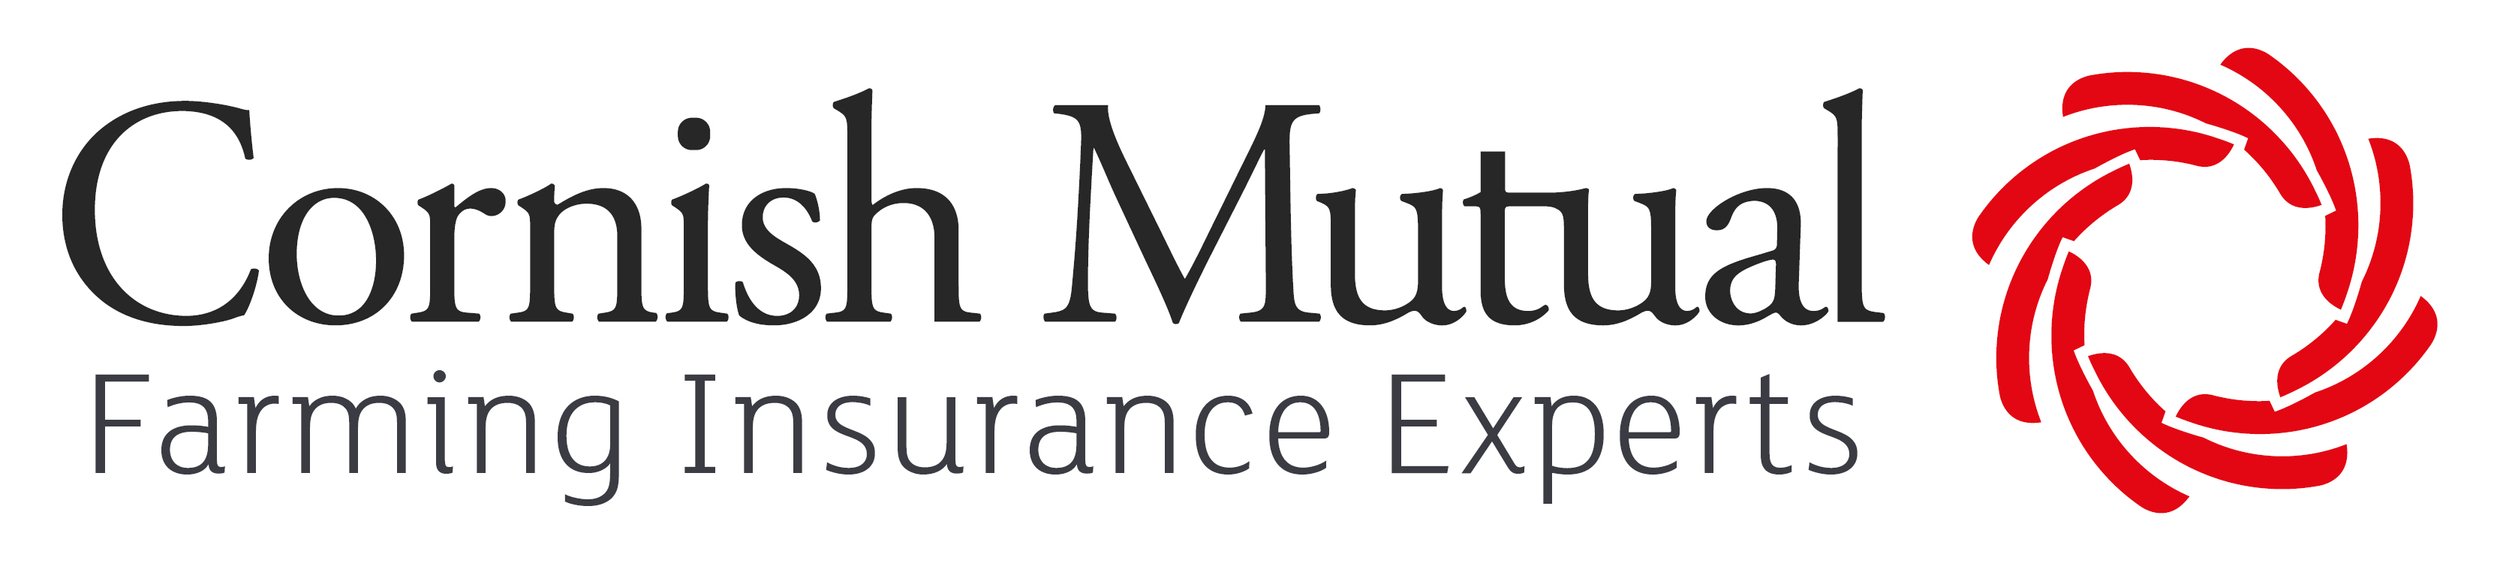 Cornish Mutual logo (strapline) final JPG.jpg